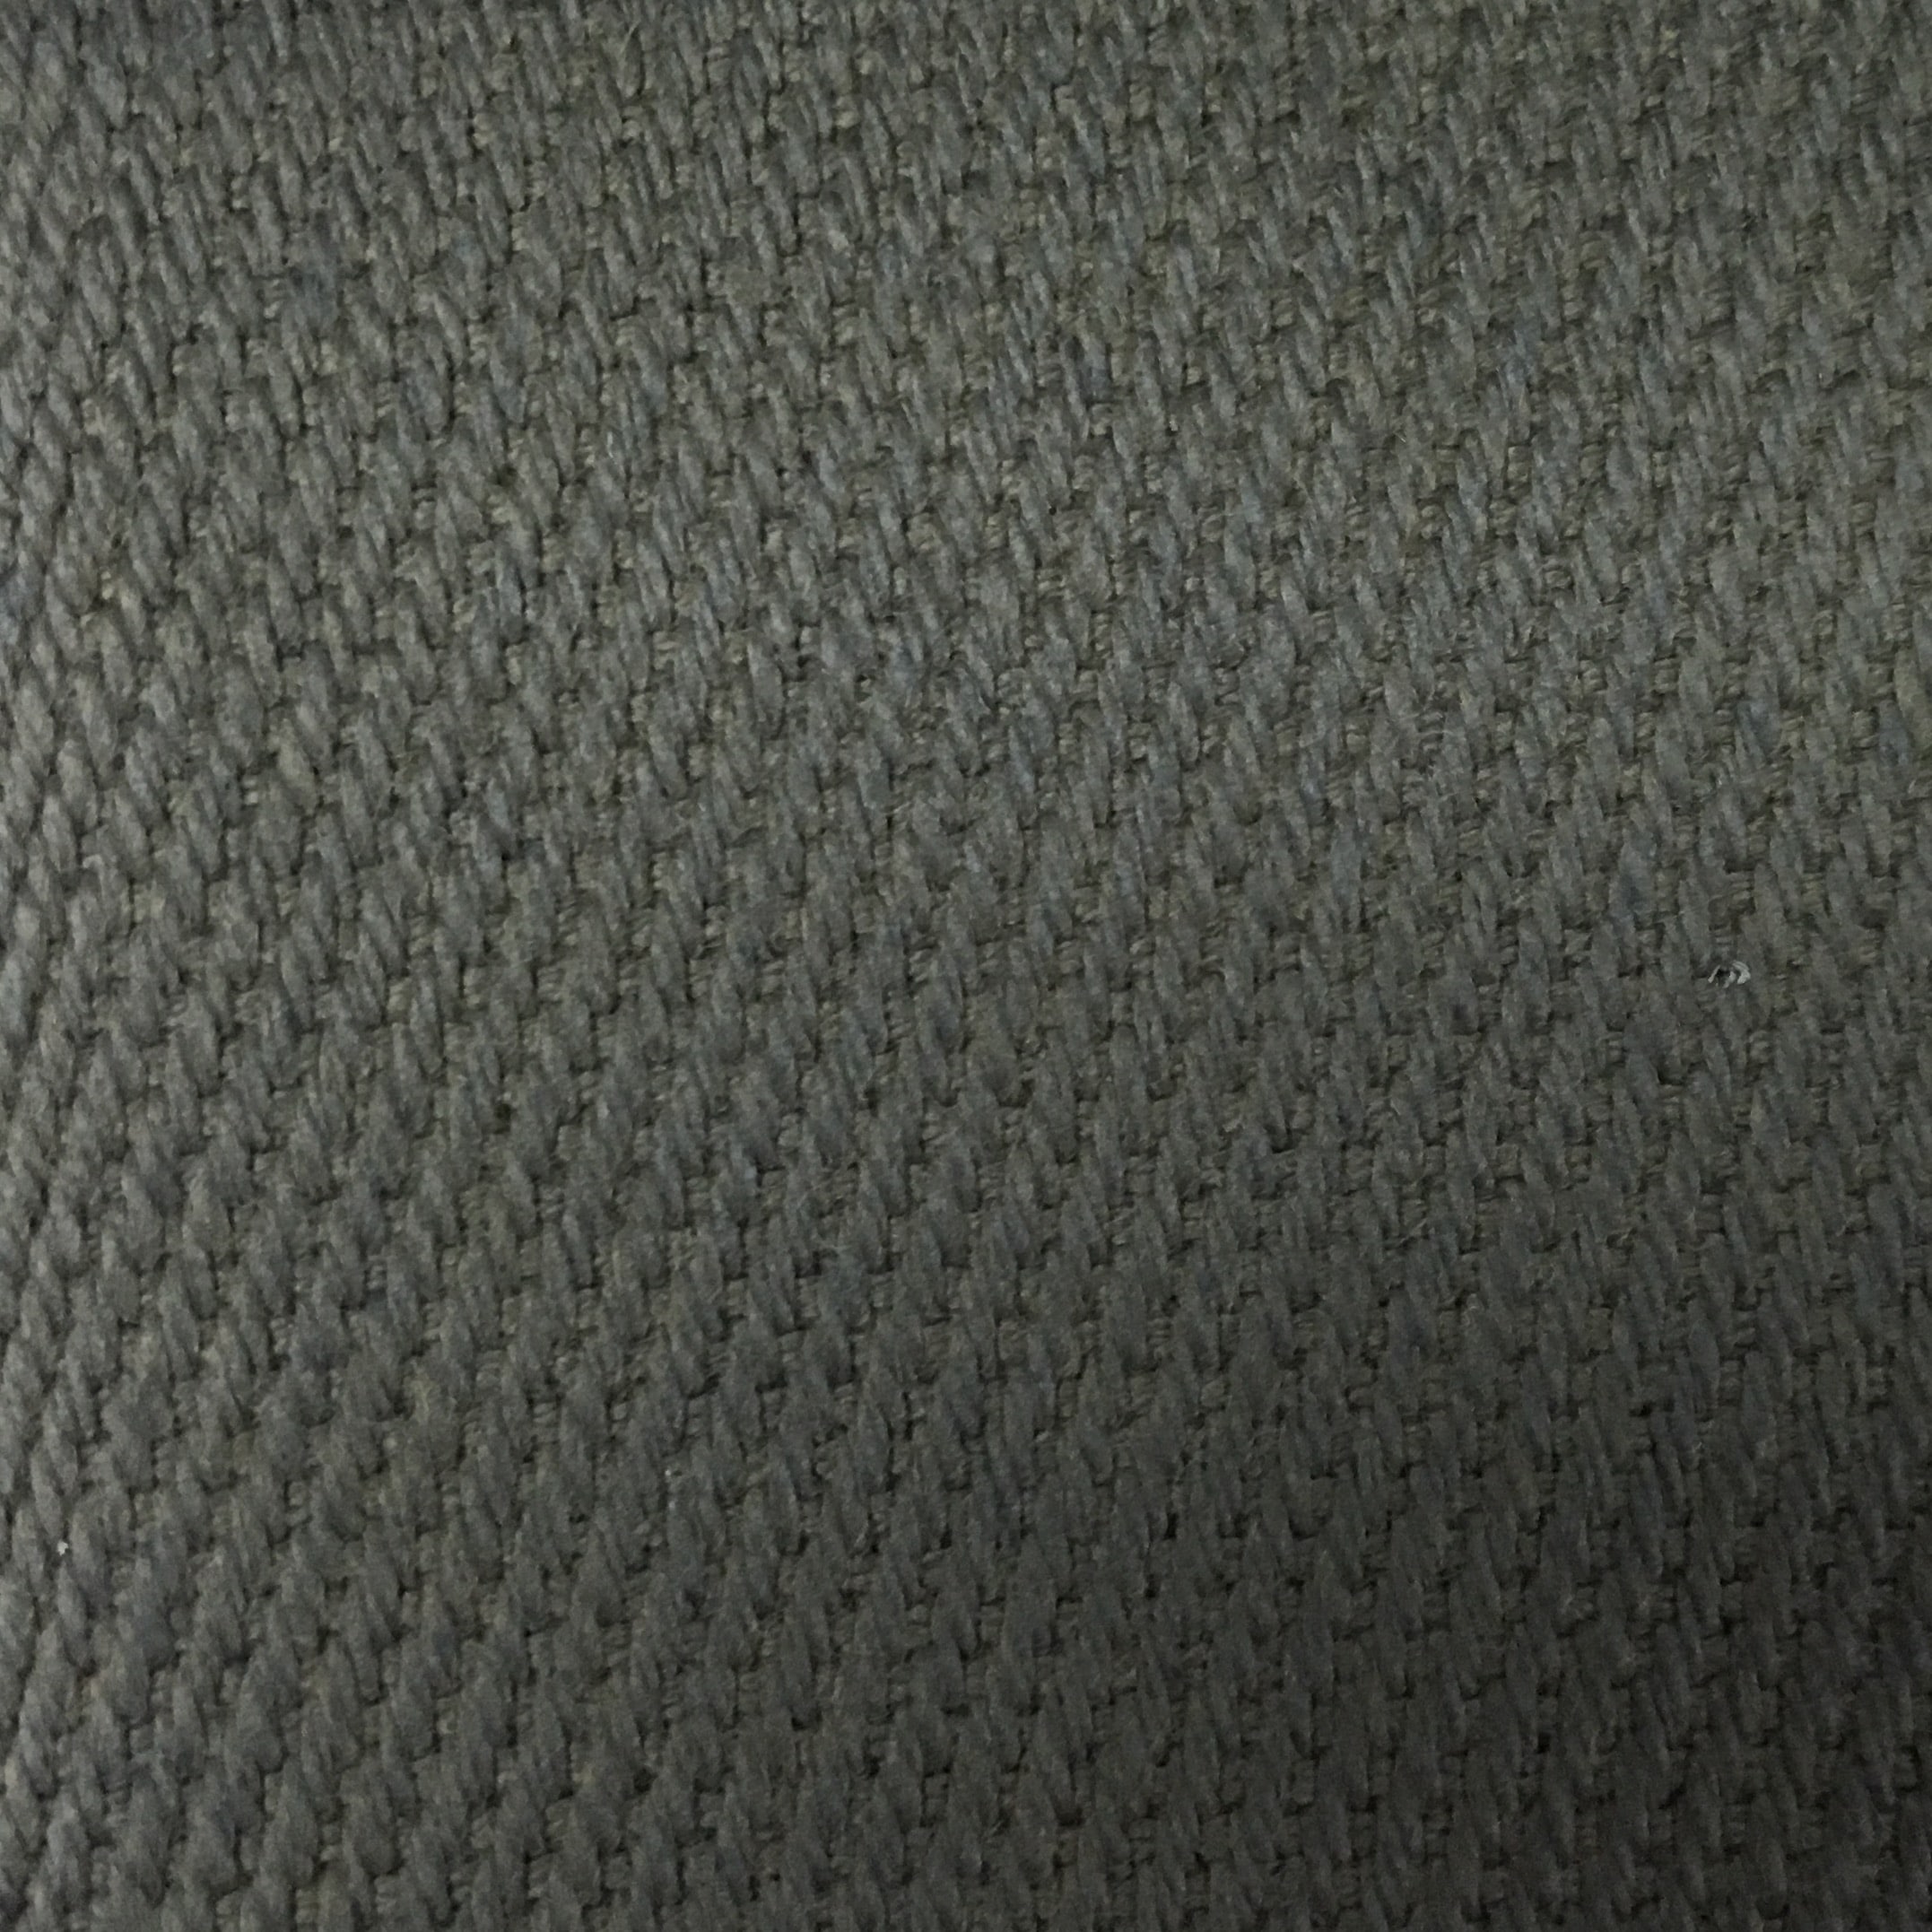 Bond Products Regular Carpet Binding in Grey